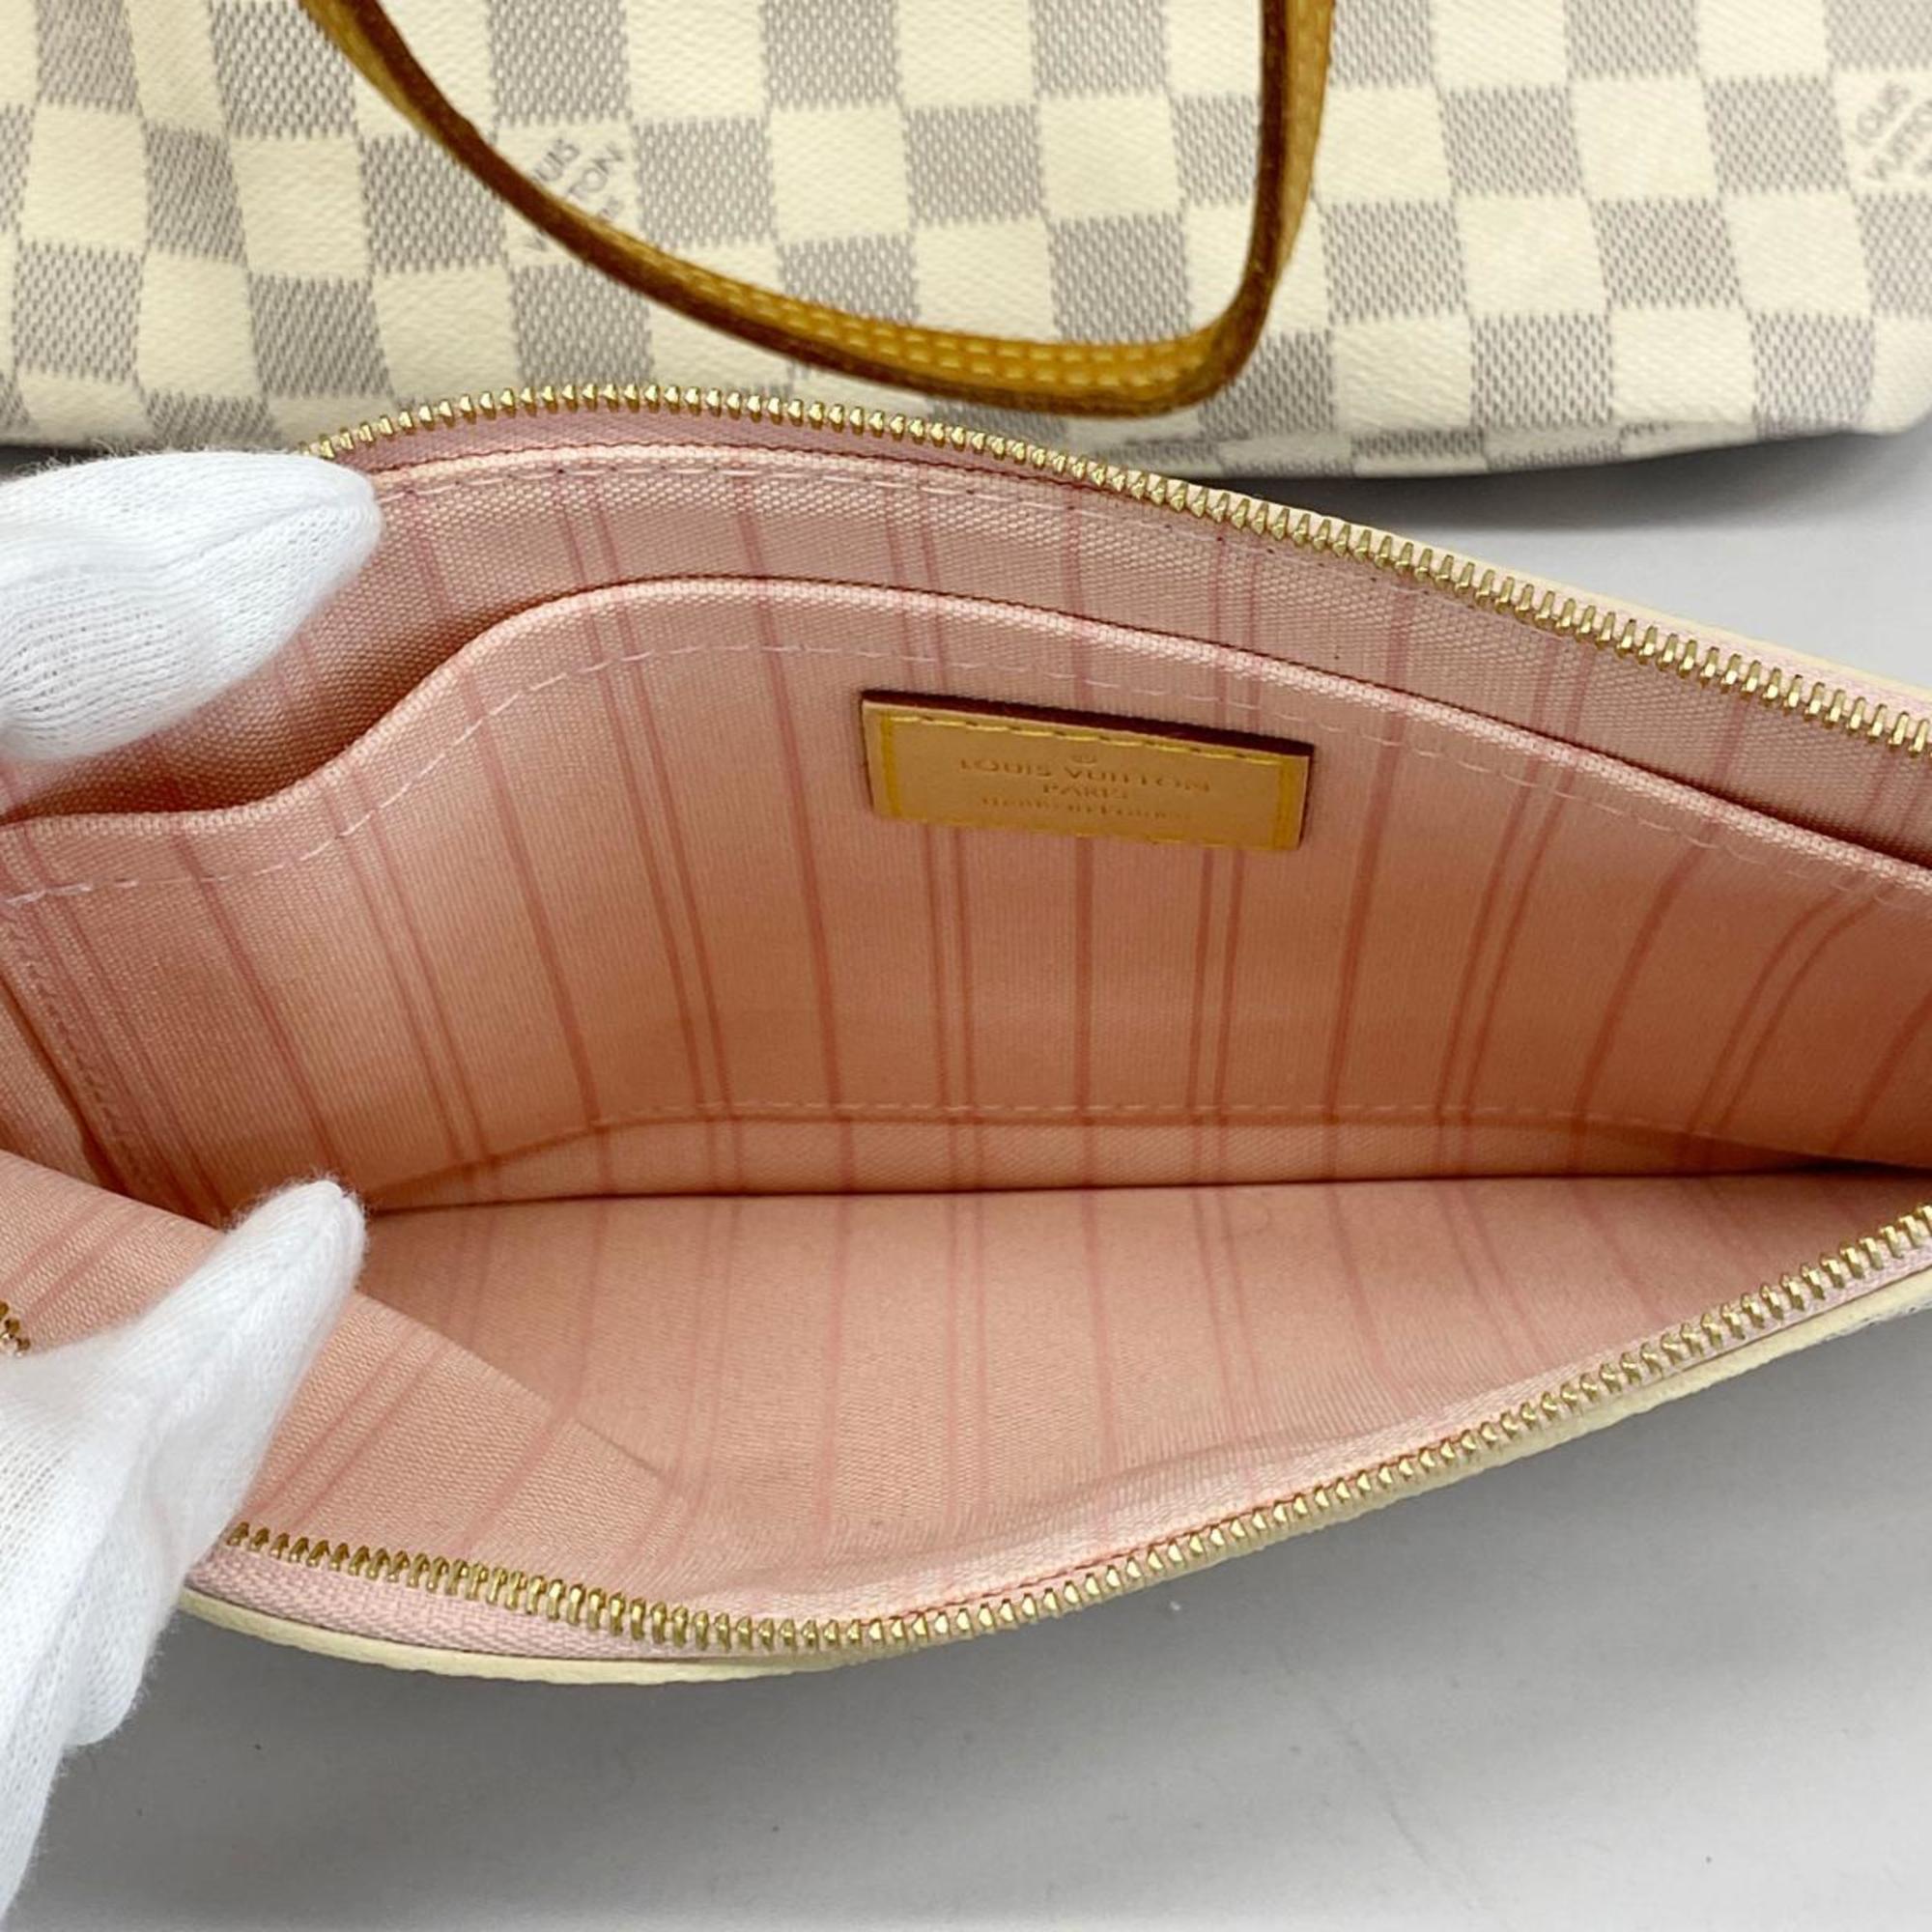 Louis Vuitton Tote Bag Damier Azur Neverfull MM N41605 White Women's